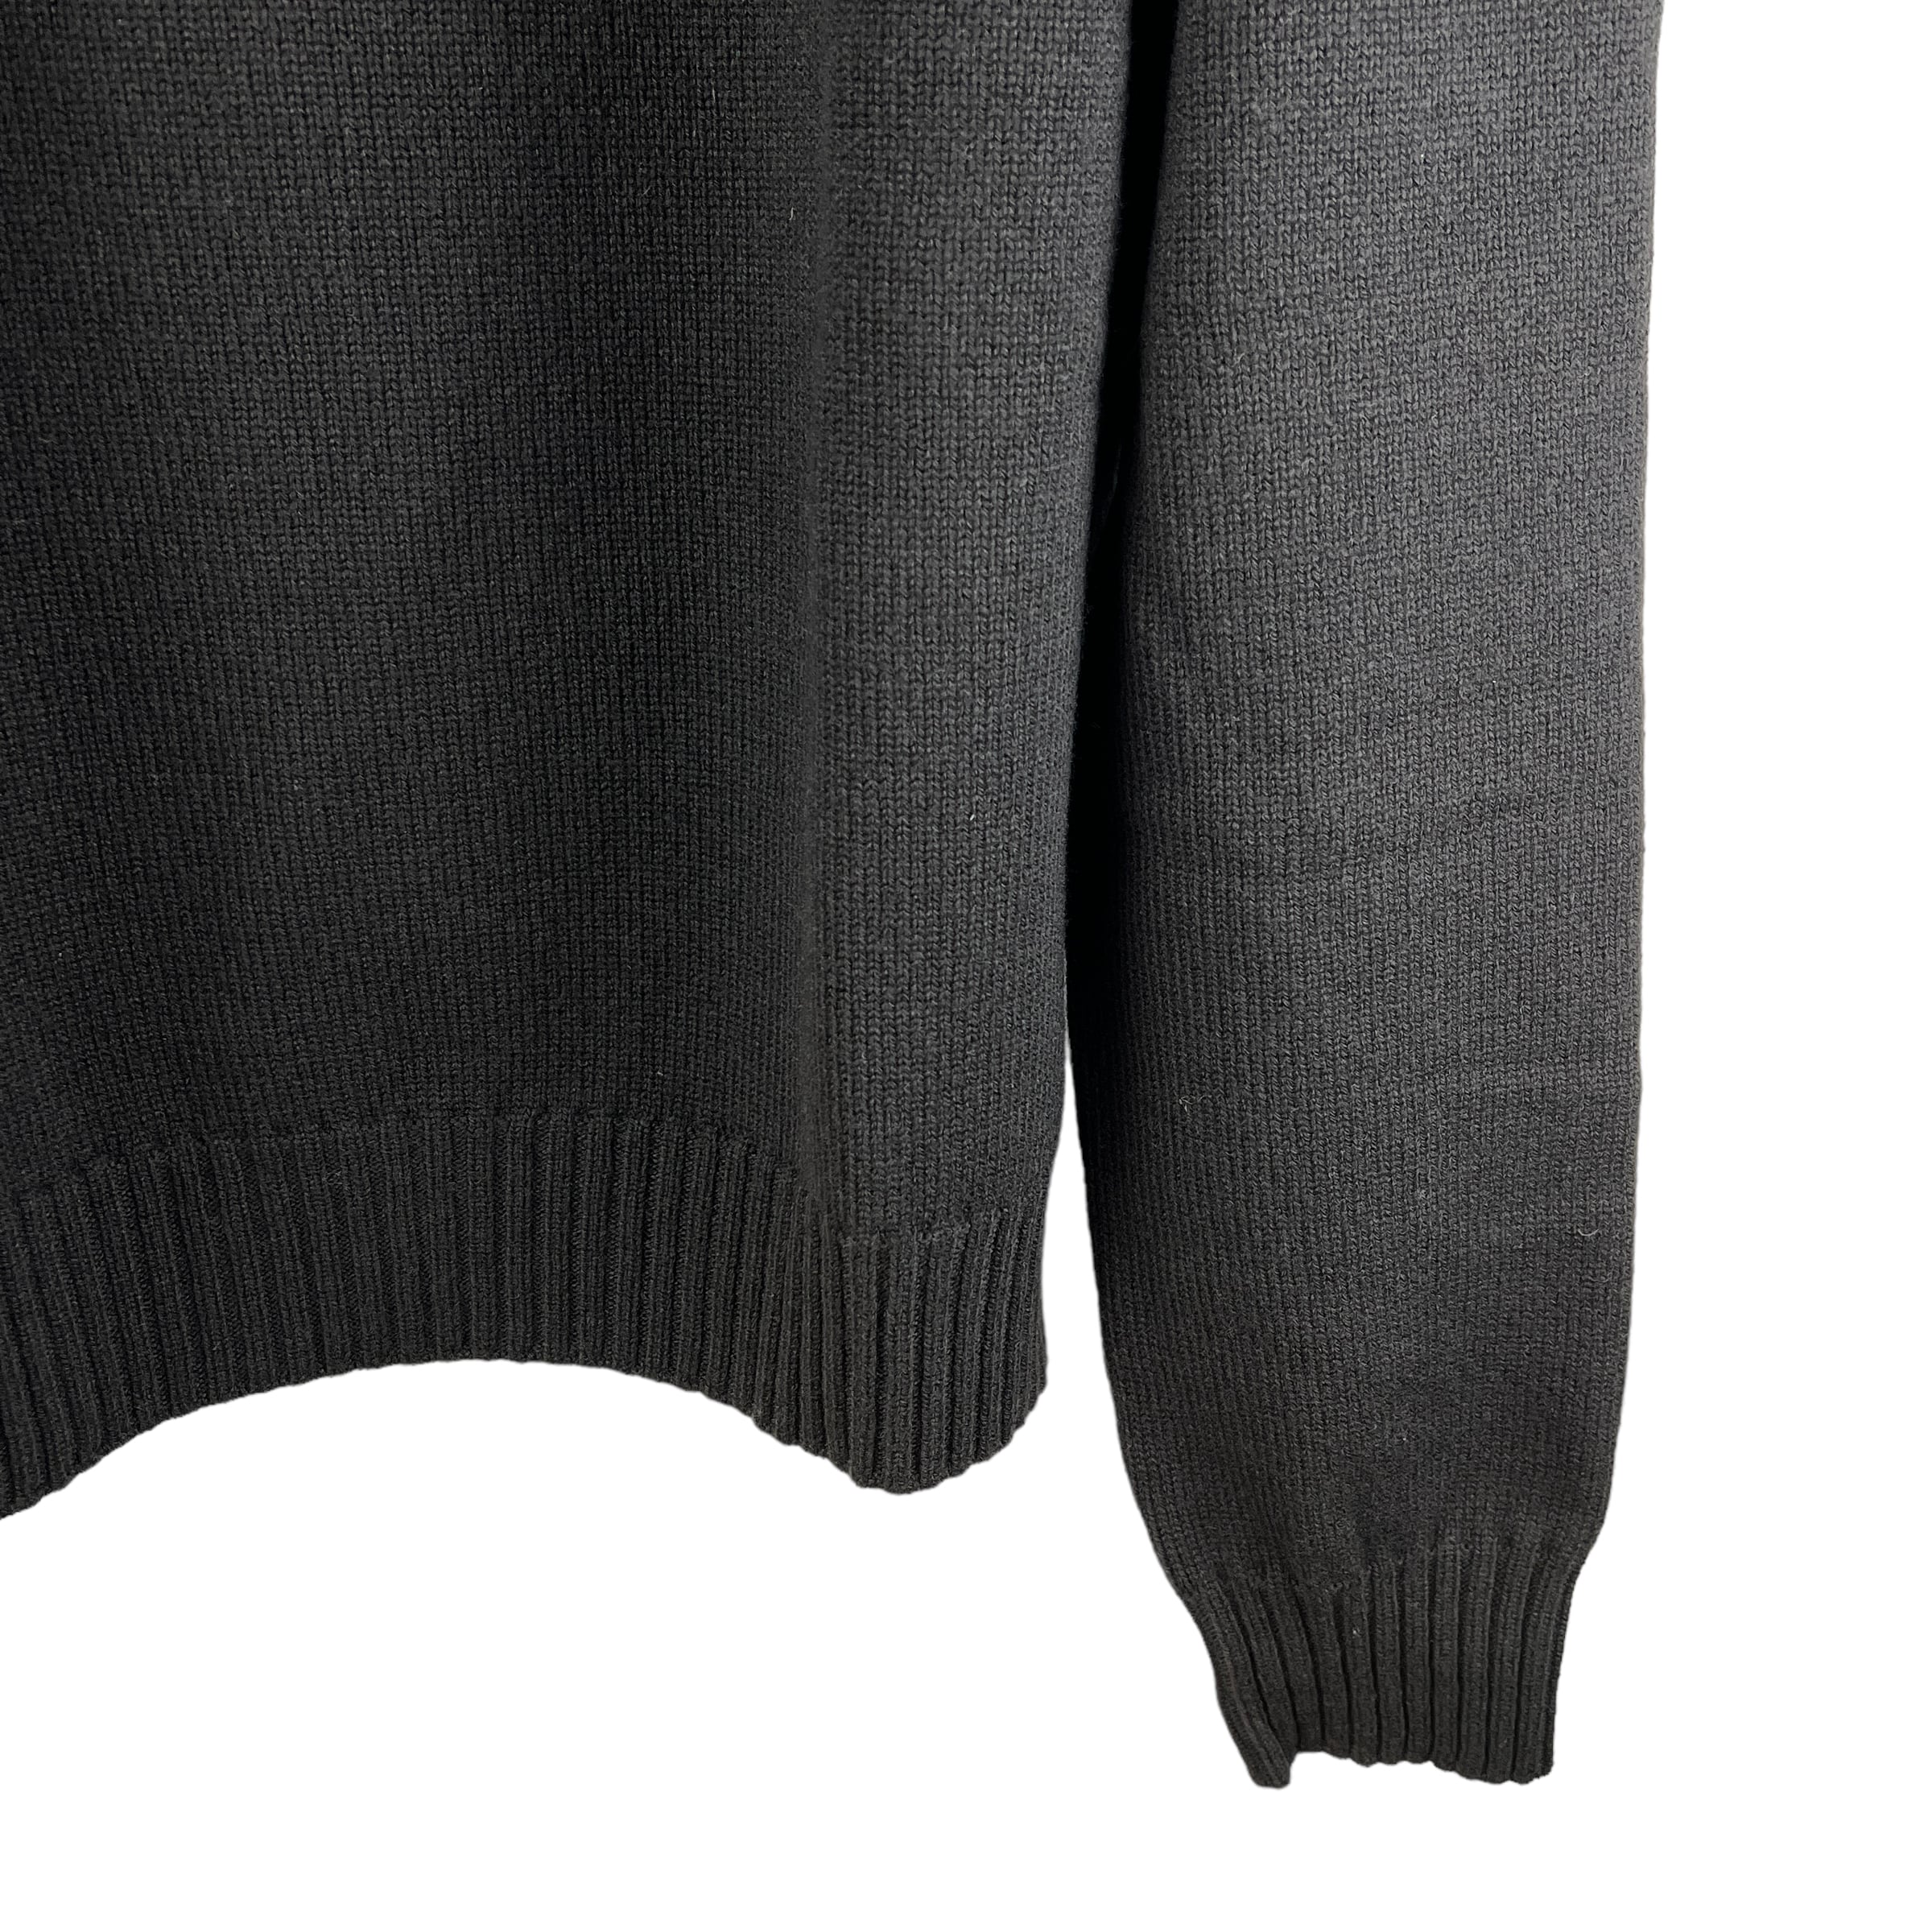 Bottega Veneta(ボッテガ ヴェネタ) Wool Pull Sweater Knit 2020AW 